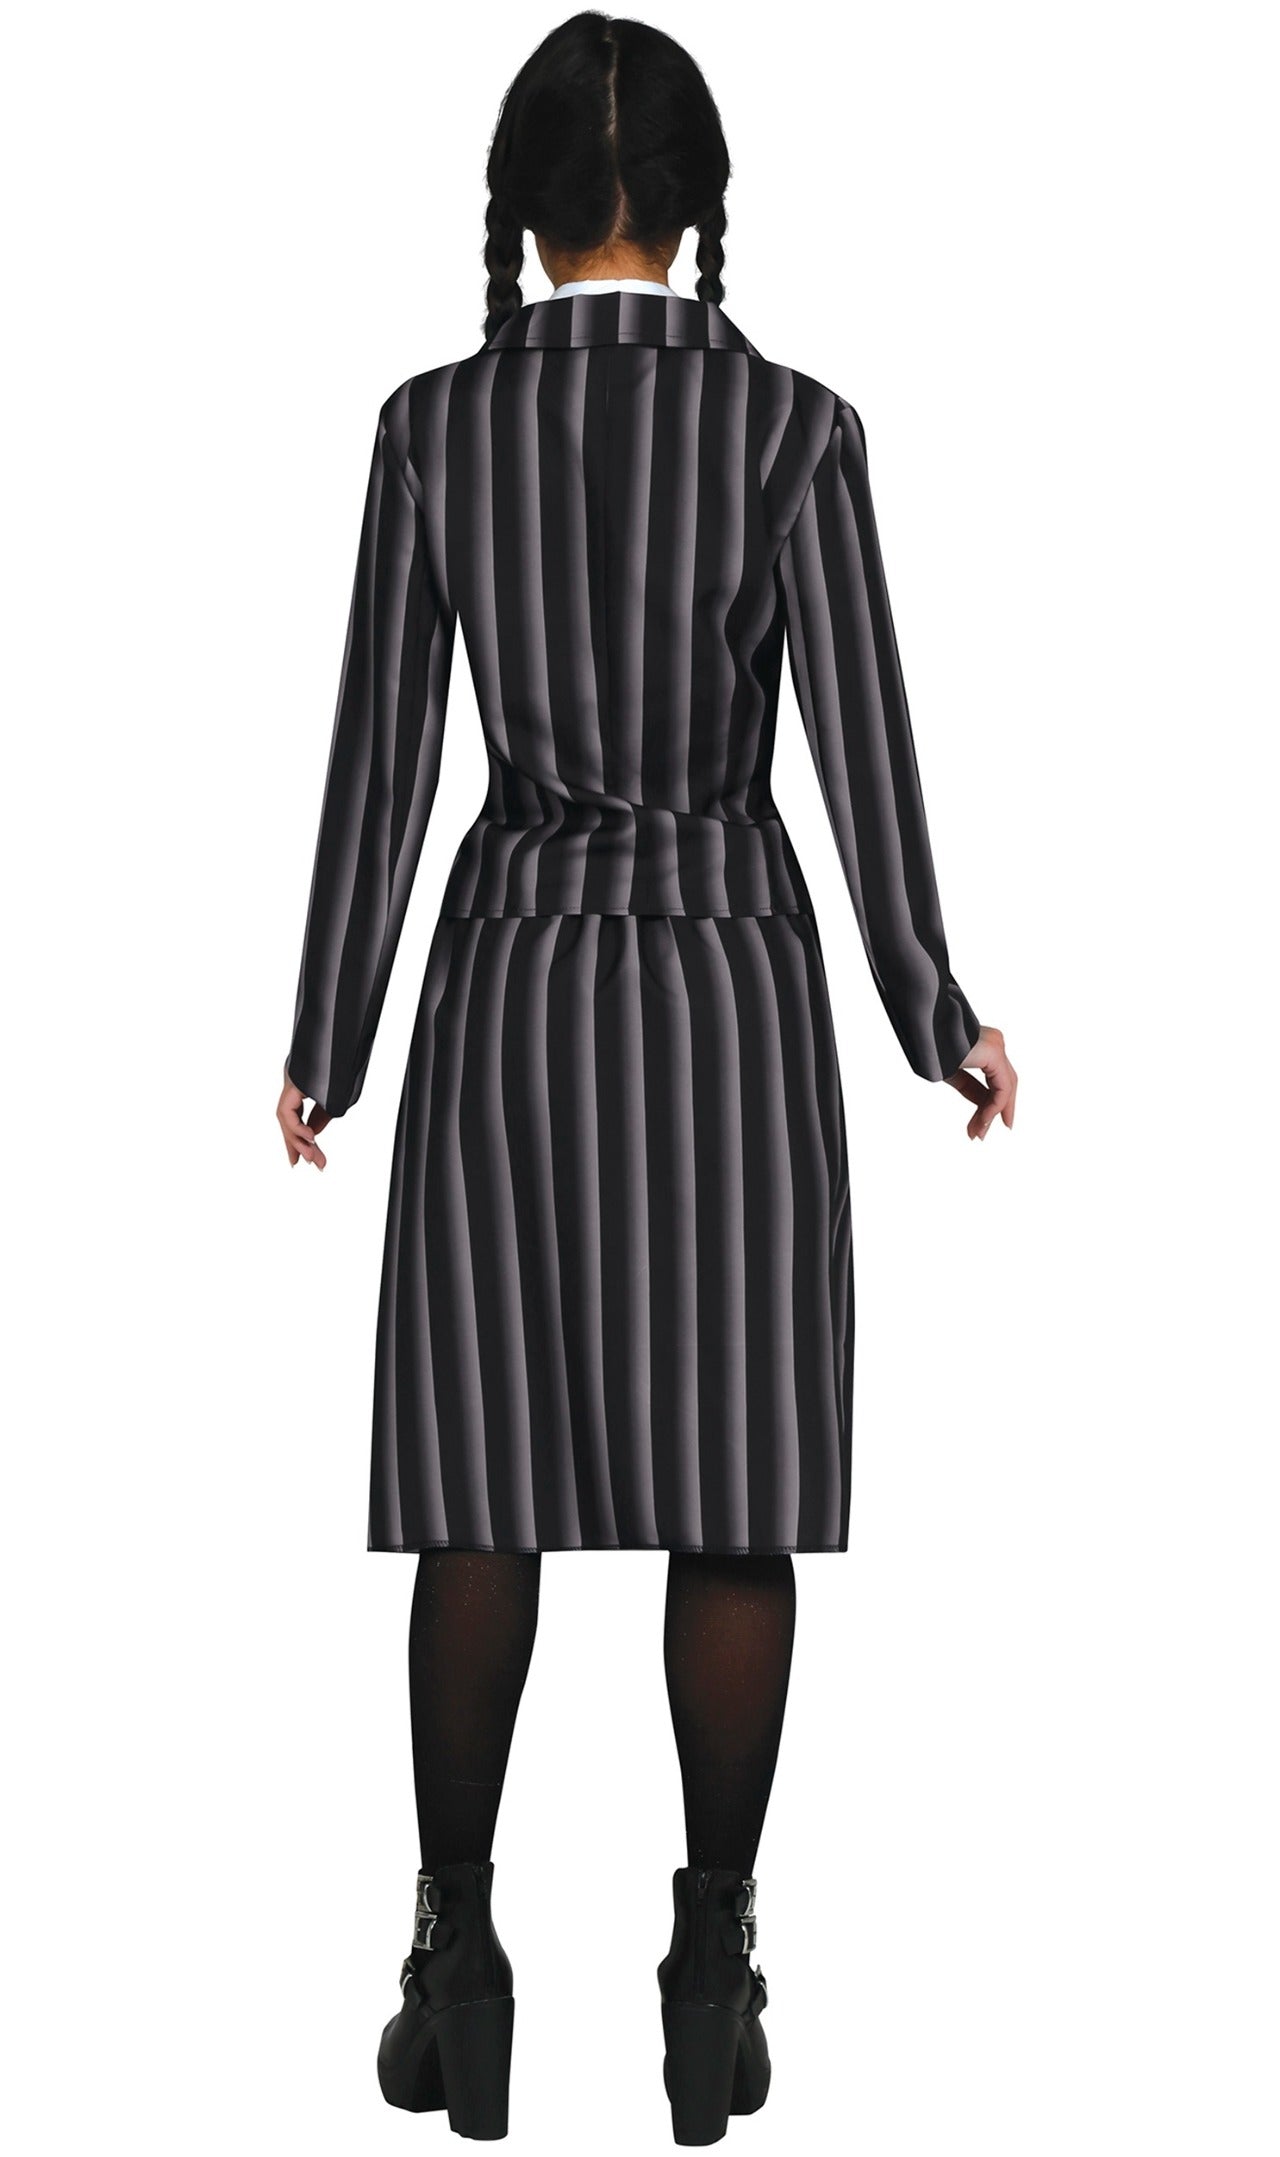 Acquista online Costume Mercoledì Gotico per donna